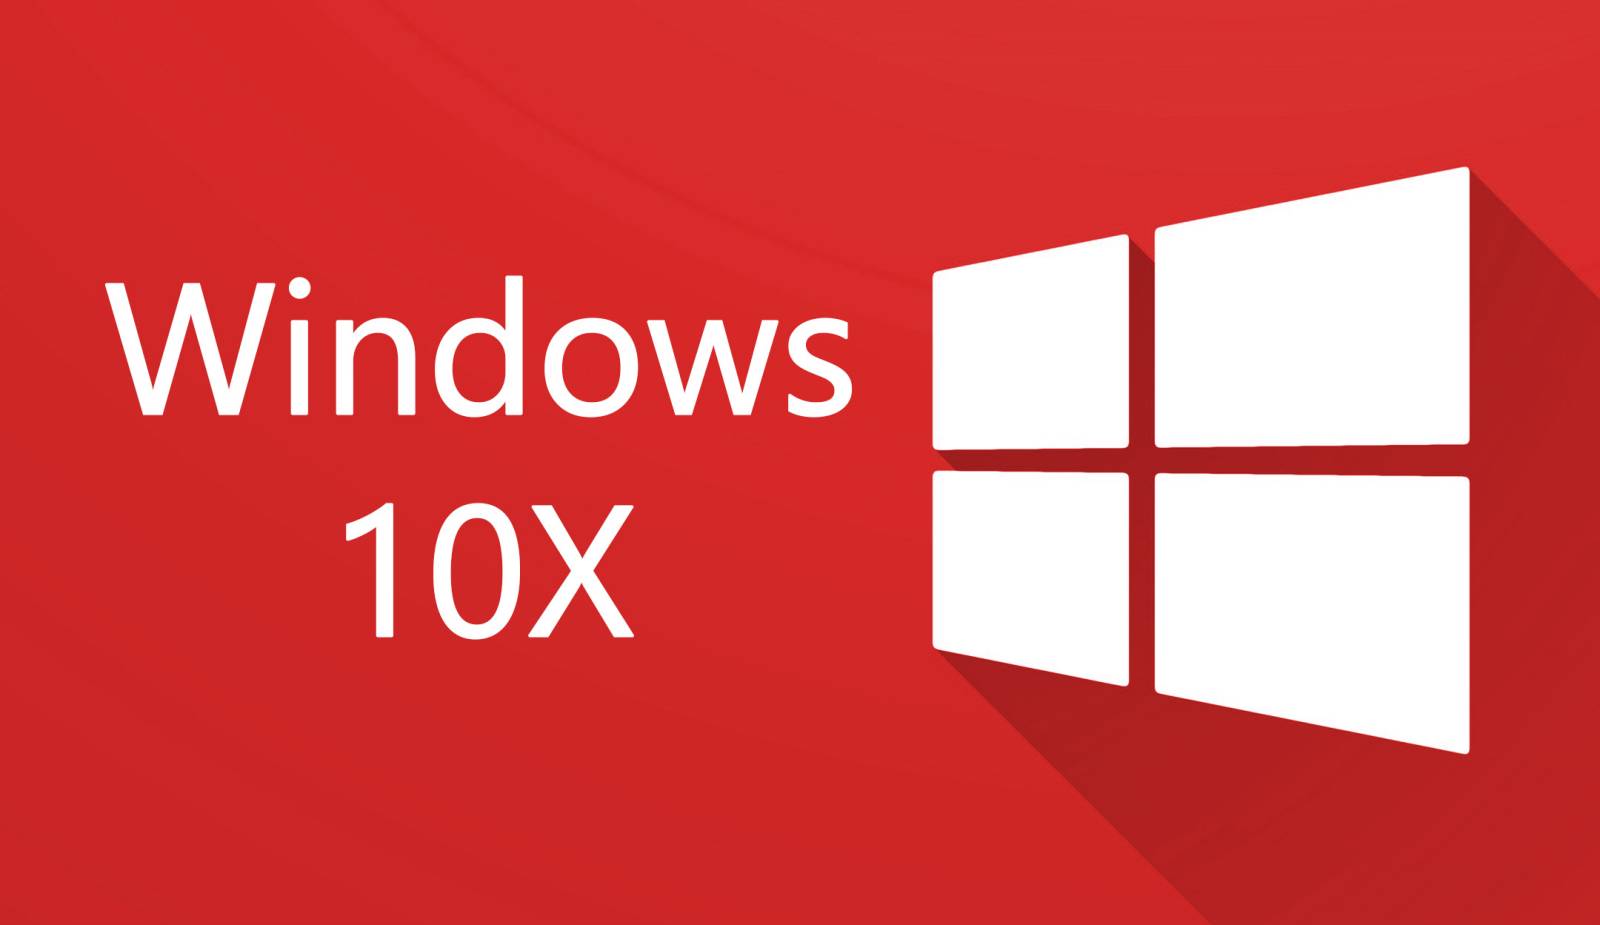 Windows 10X File Explorer